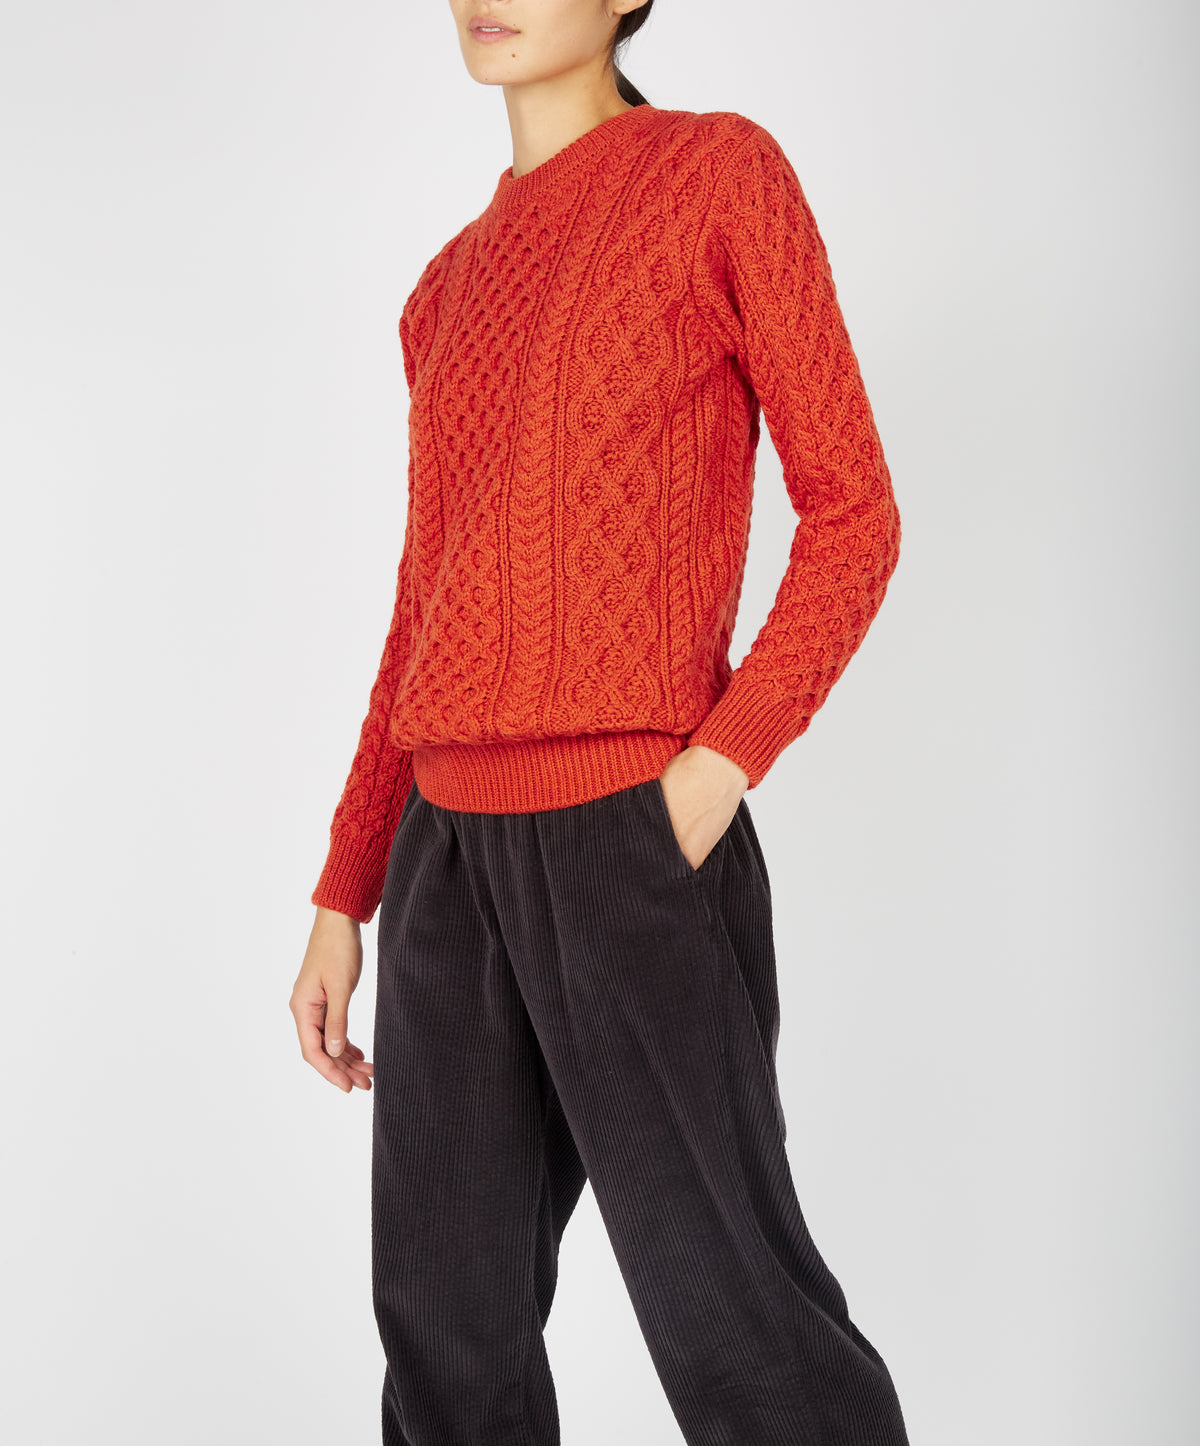 IrelandsEye Knitwear Blasket Honeycomb Stitch Womens Aran Sweater Orange Marl